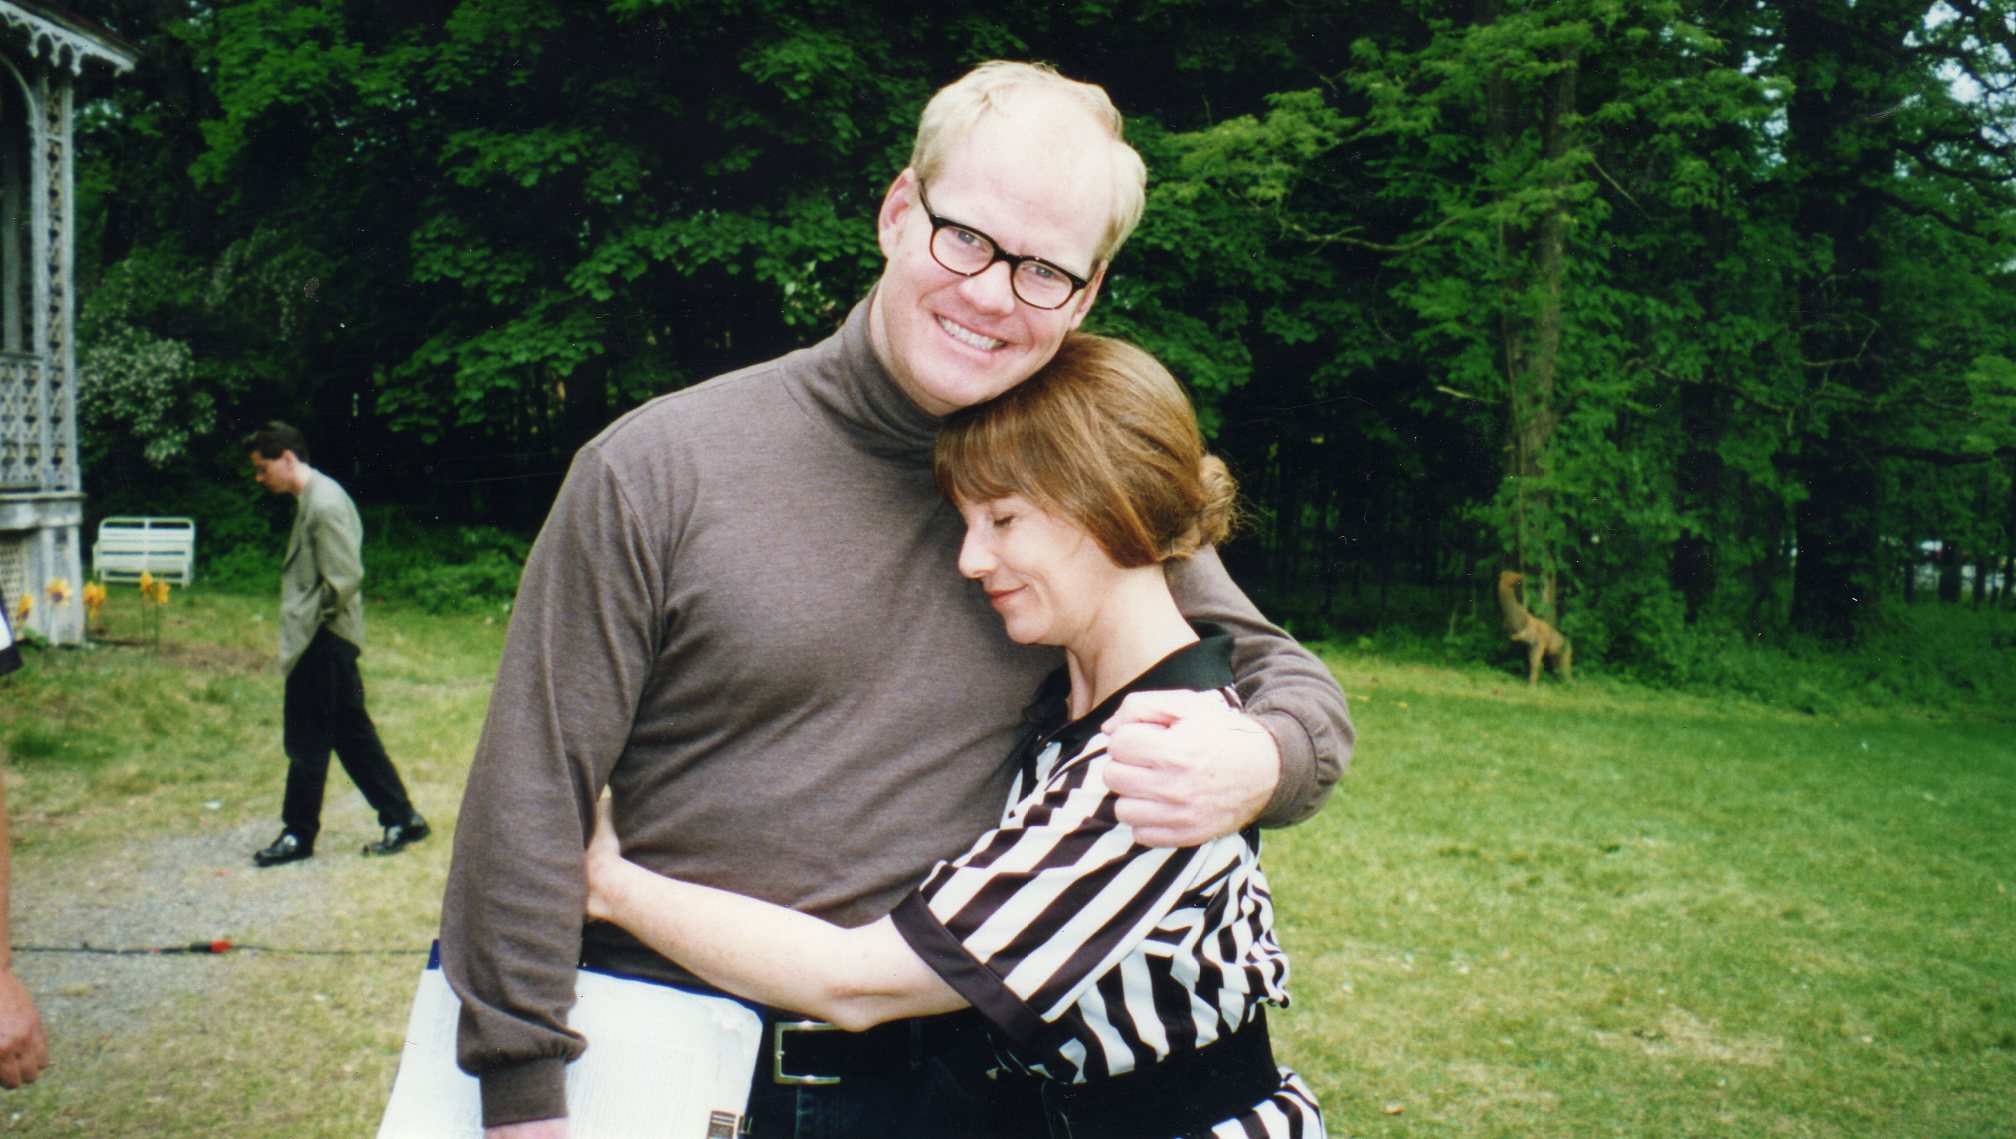 Laraine Newman and Jim Gaffigan